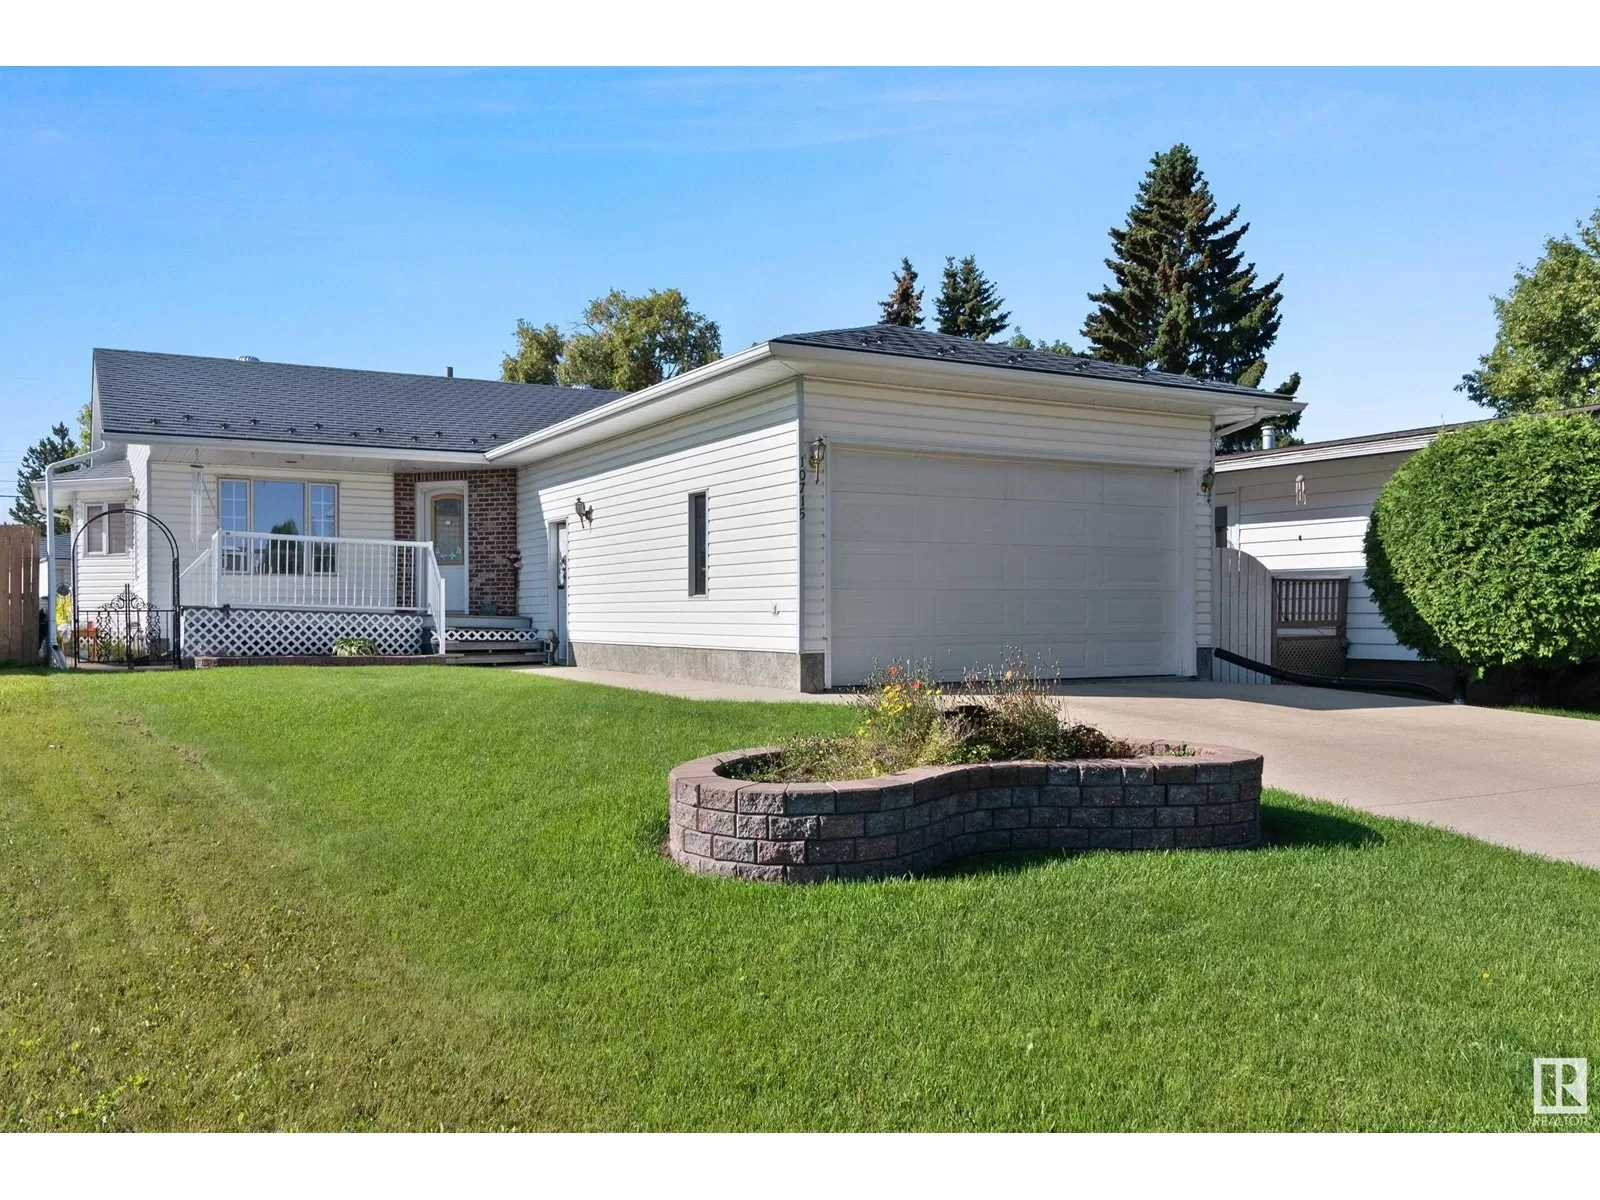 House for rent: 10715 103 St, Westlock, Alberta T7P 1J8